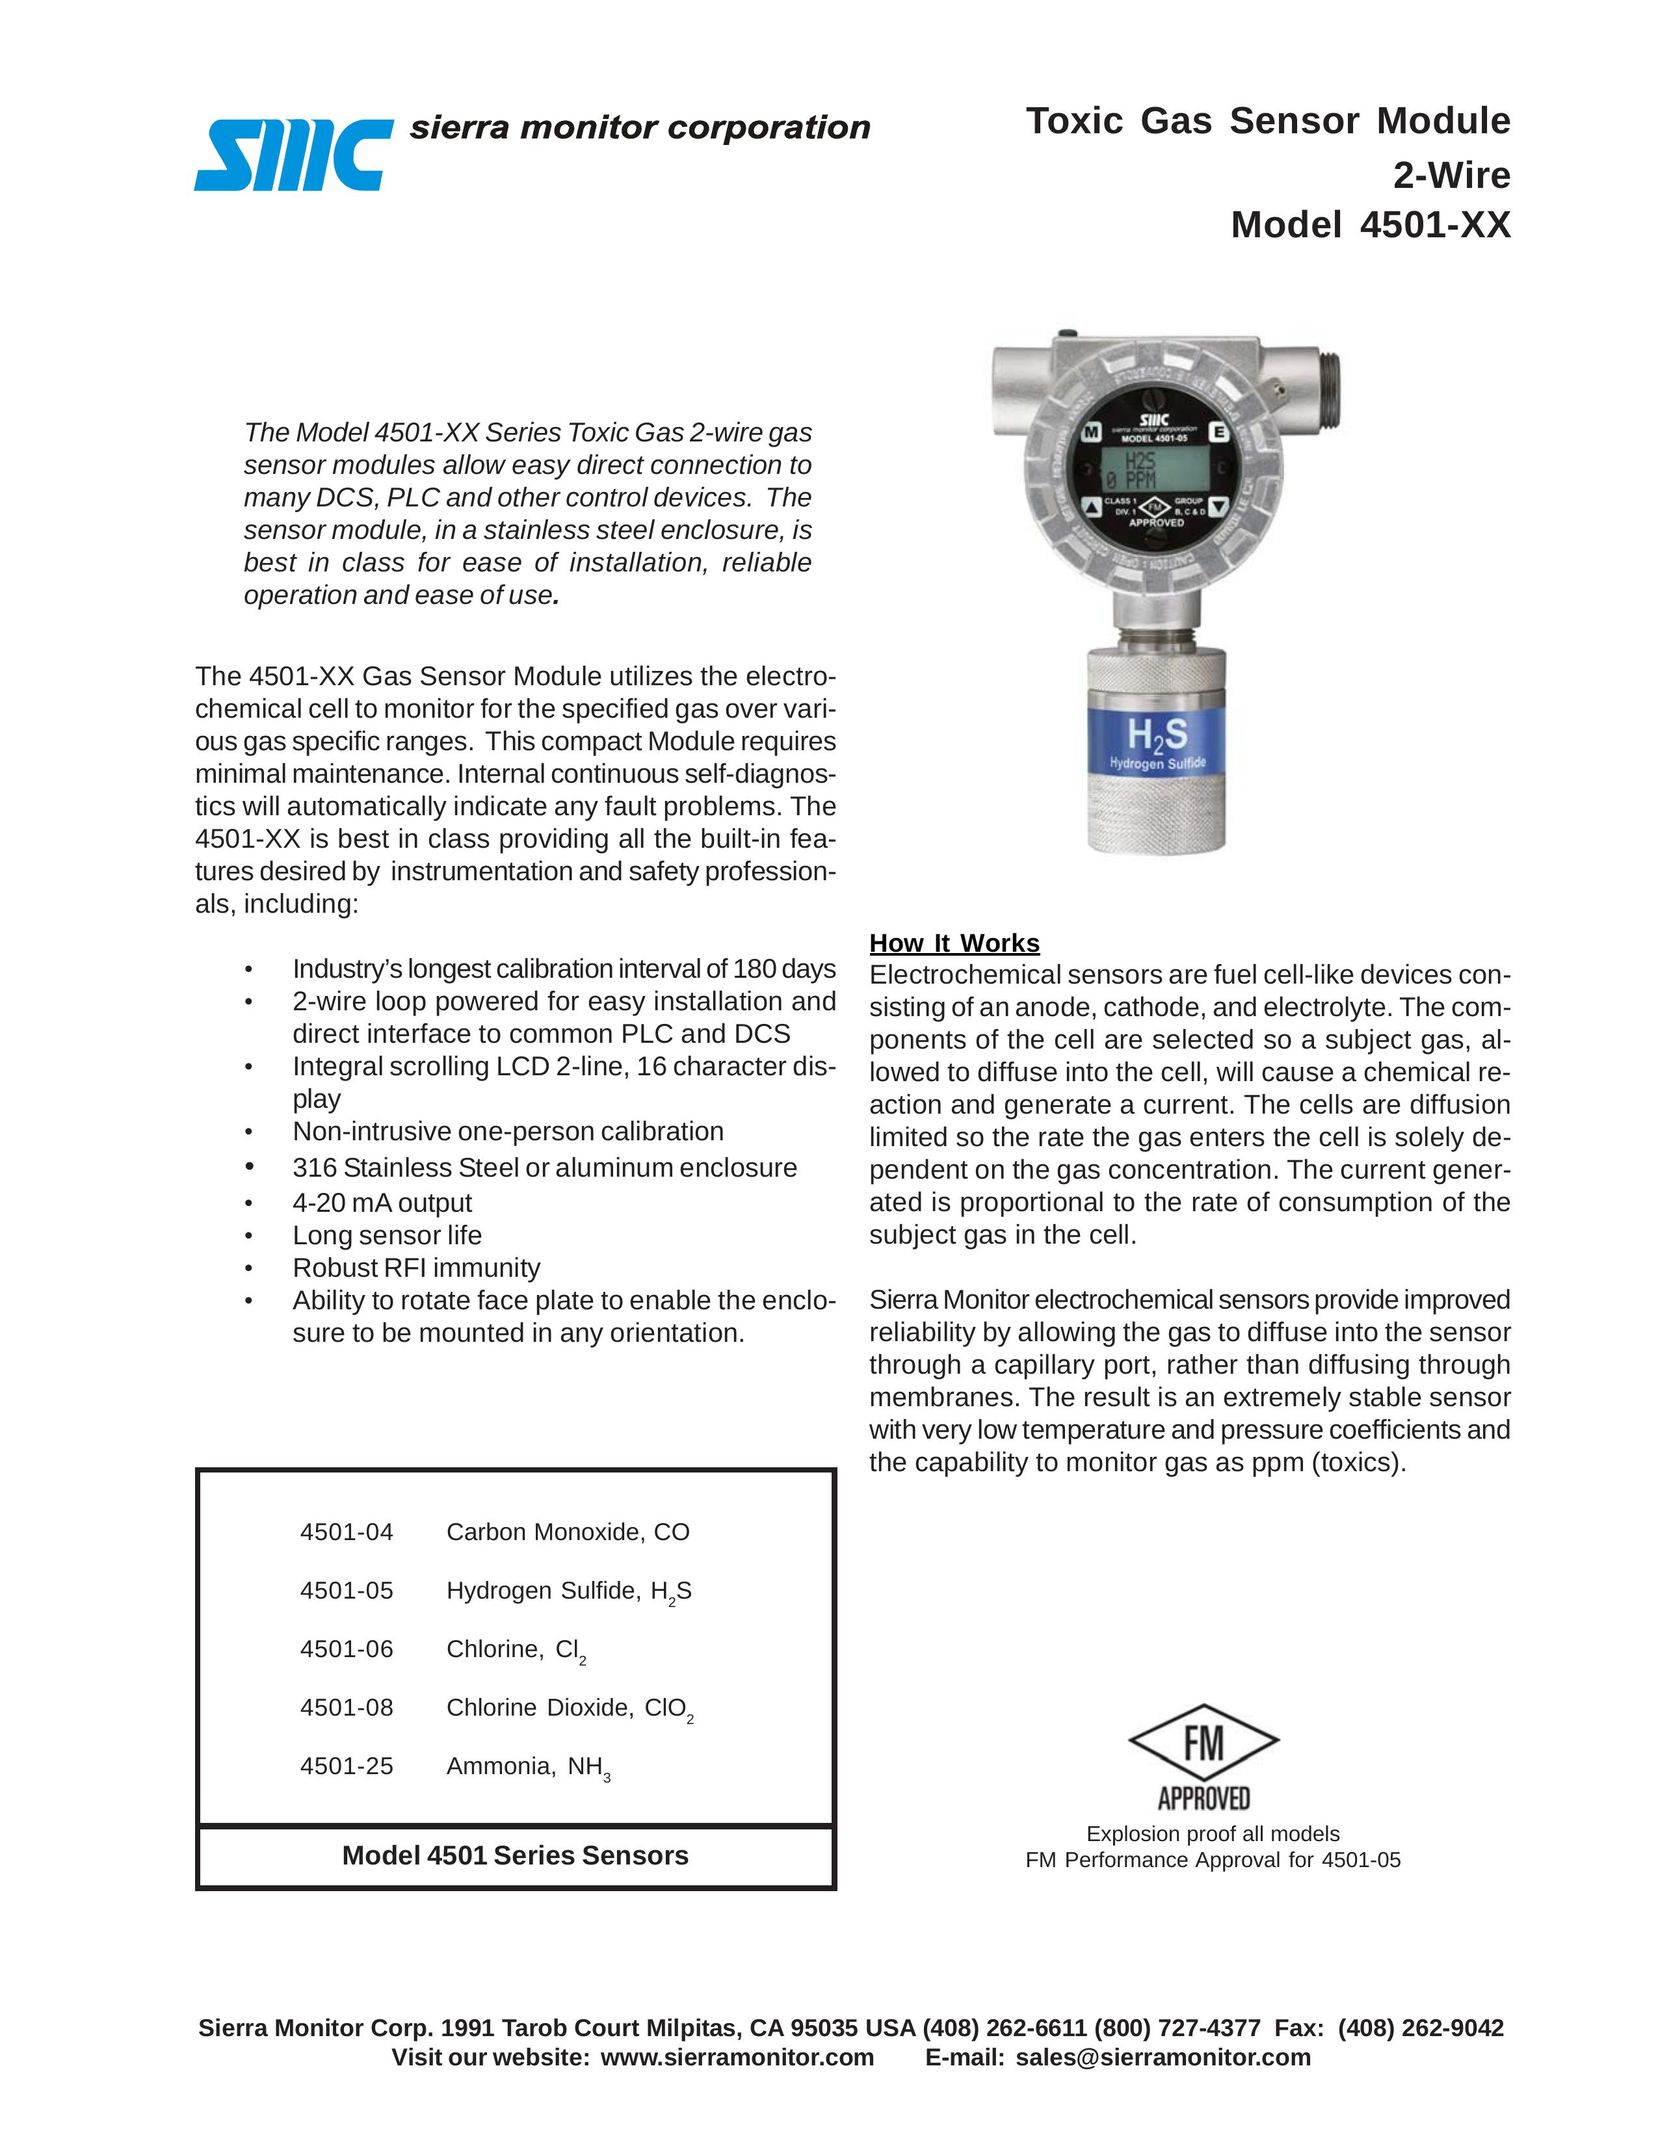 Sierra Monitor Corporation 4501-XX Smoke Alarm User Manual